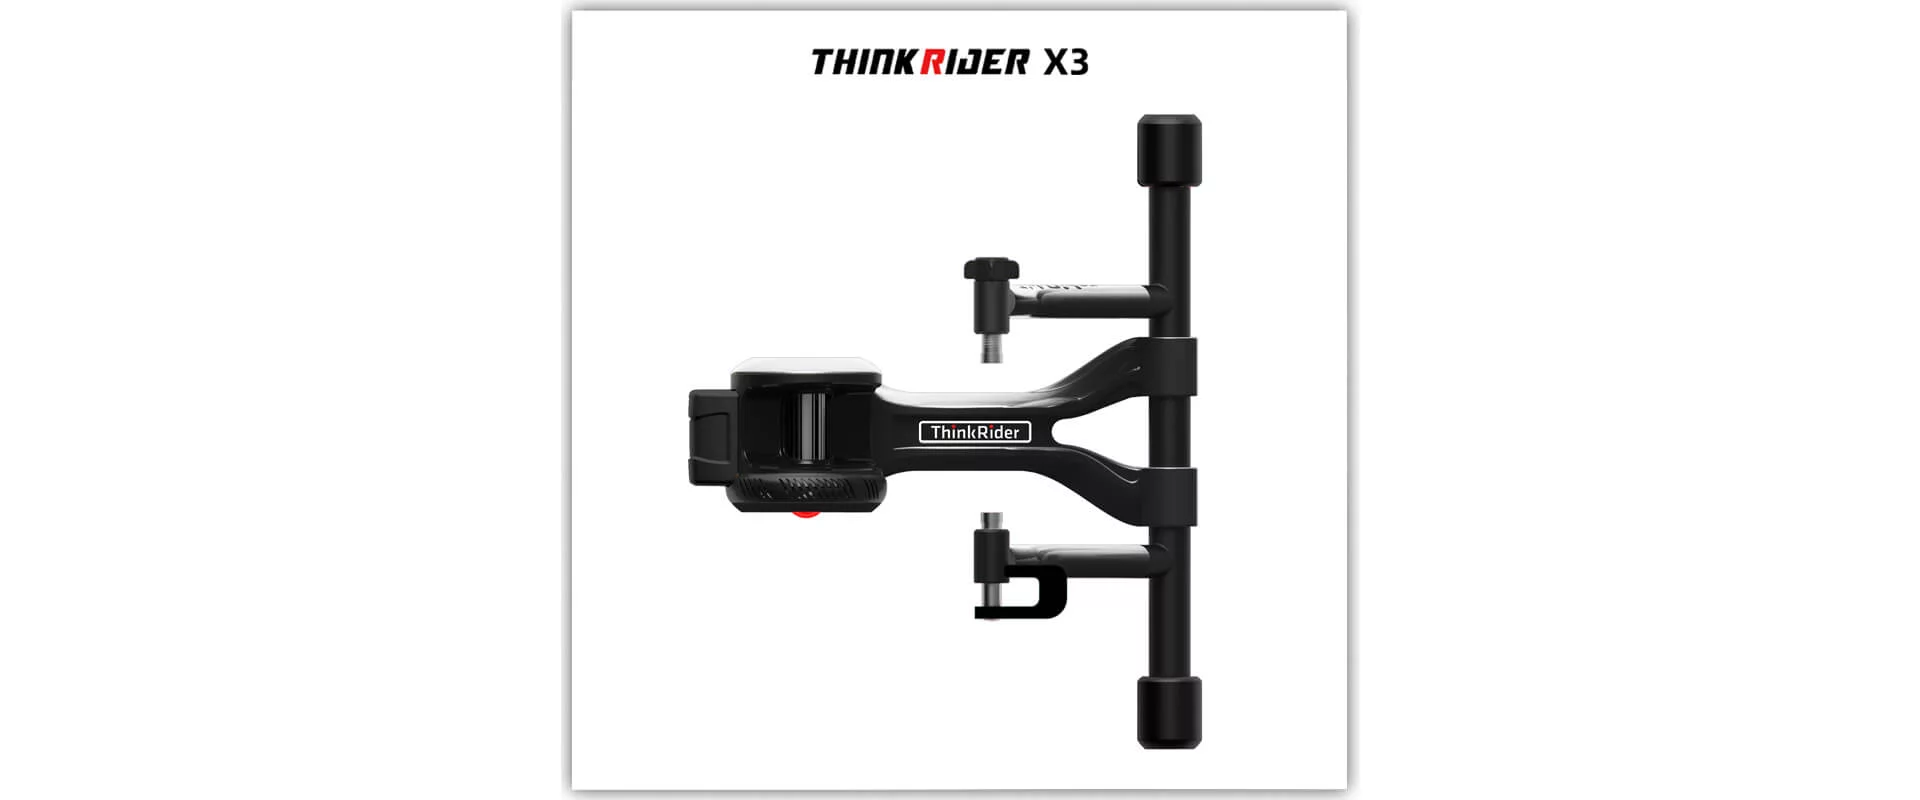 Thinkrider X3 Pro smart trainer фото 4